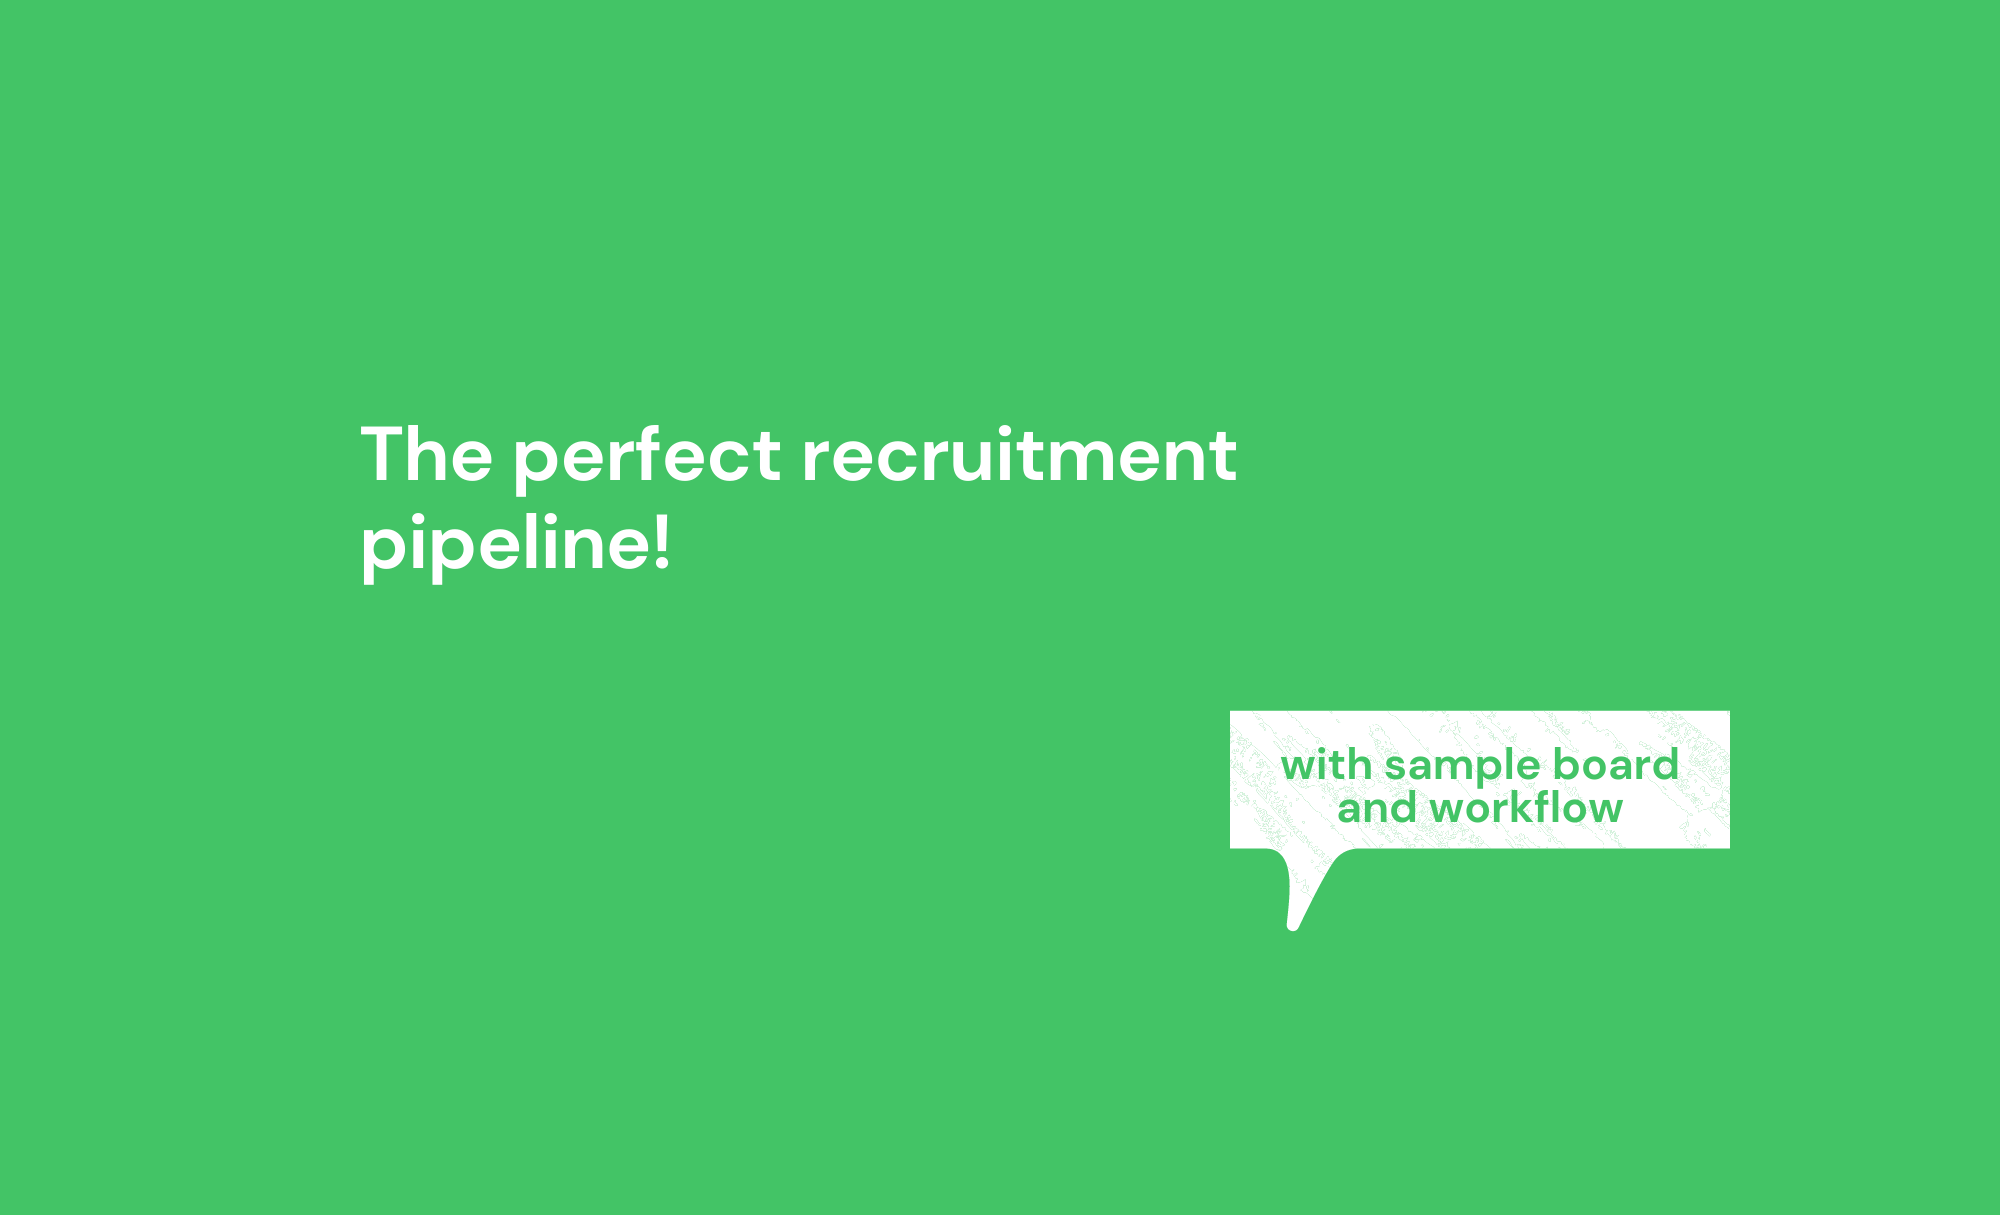 The perfect recruitment pipeline